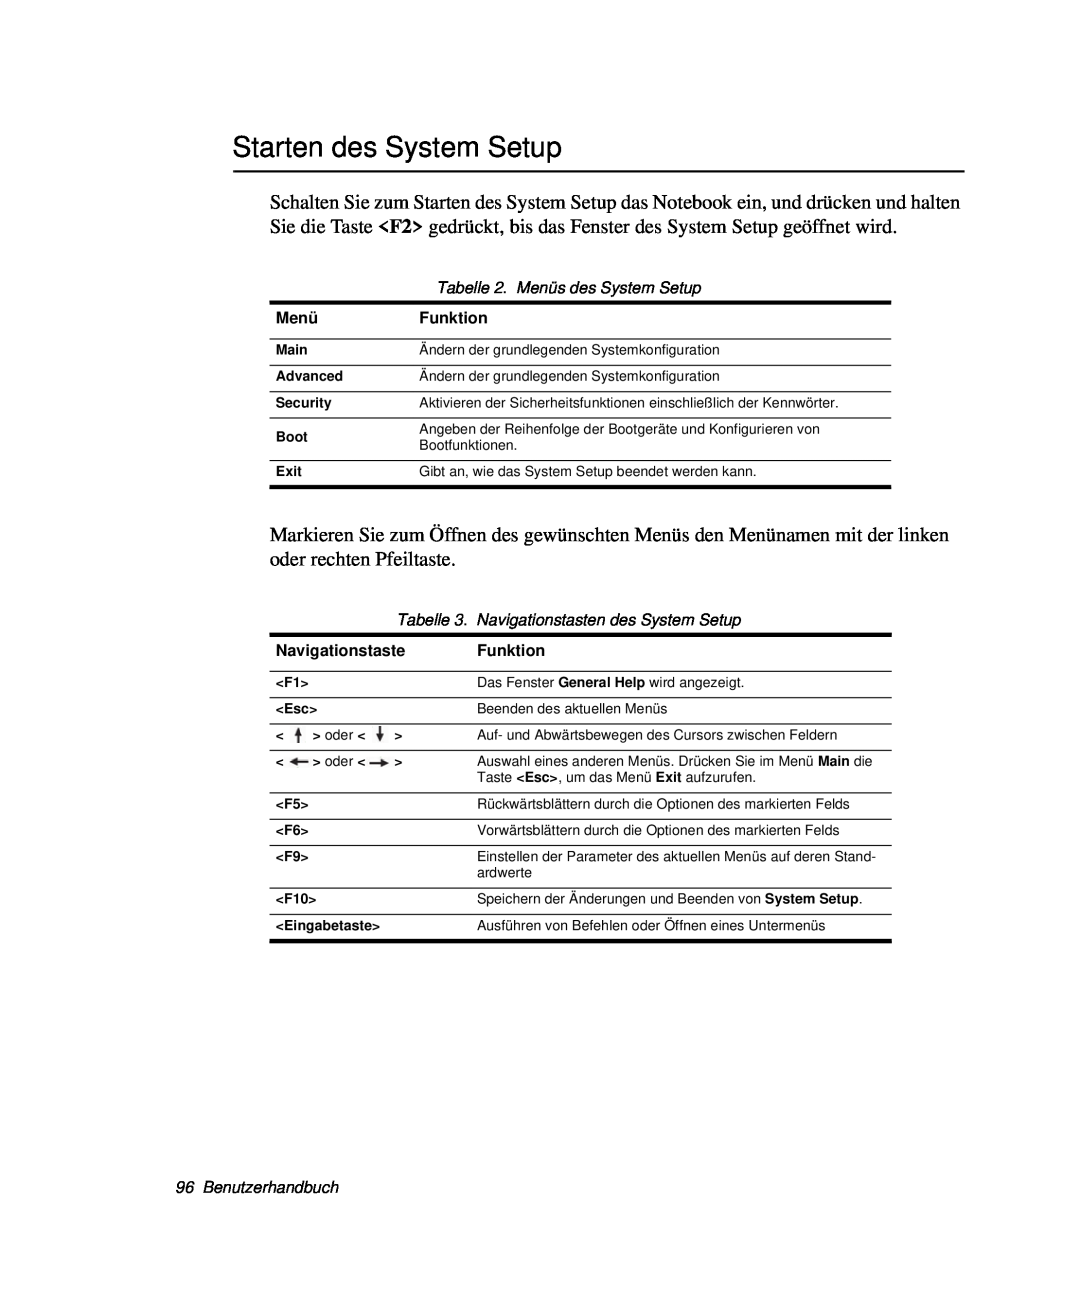 Samsung NP-R41E003/SEG, NP-R40FY0B/SEG manual Starten des System Setup, Tabelle 2. Menüs des System Setup, Benutzerhandbuch 